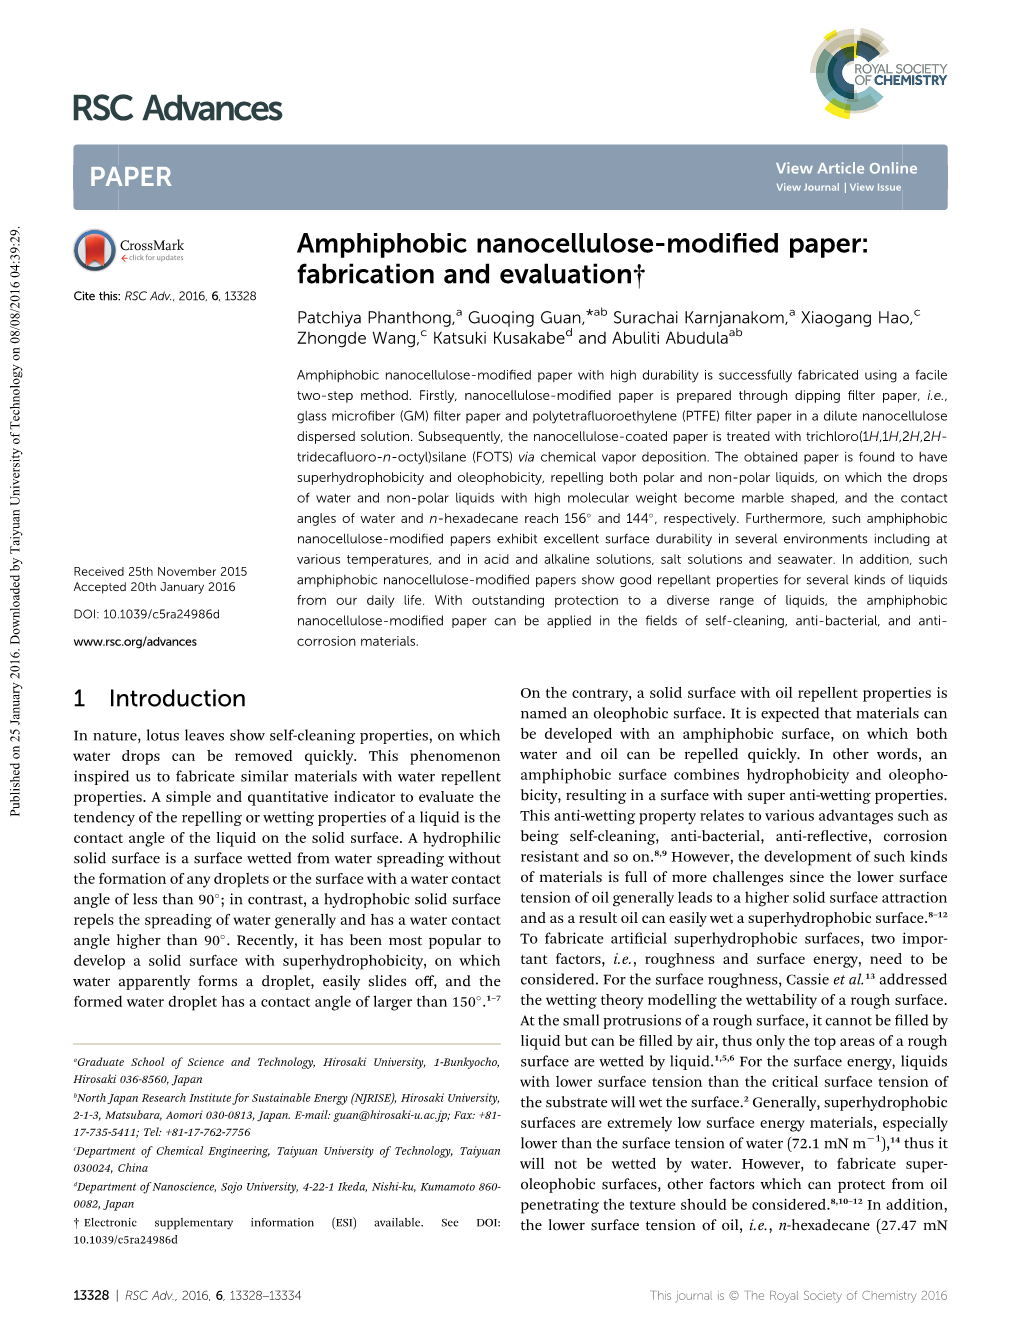 Amphiphobic Nanocellulose-Modified Paper